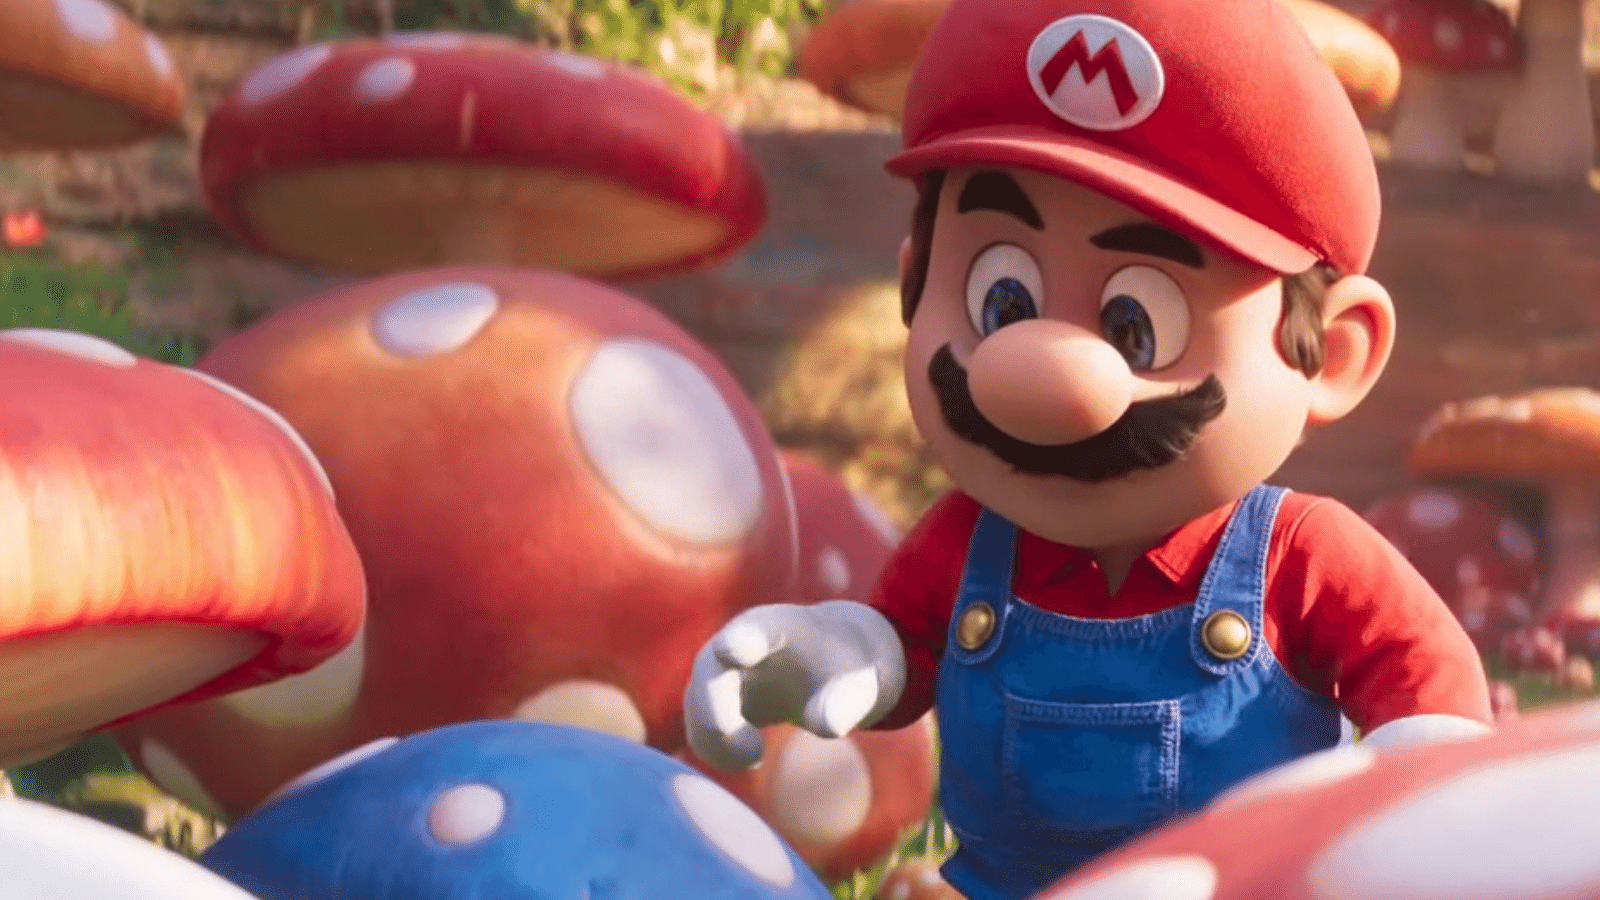 Mario is played by Chris Pratt